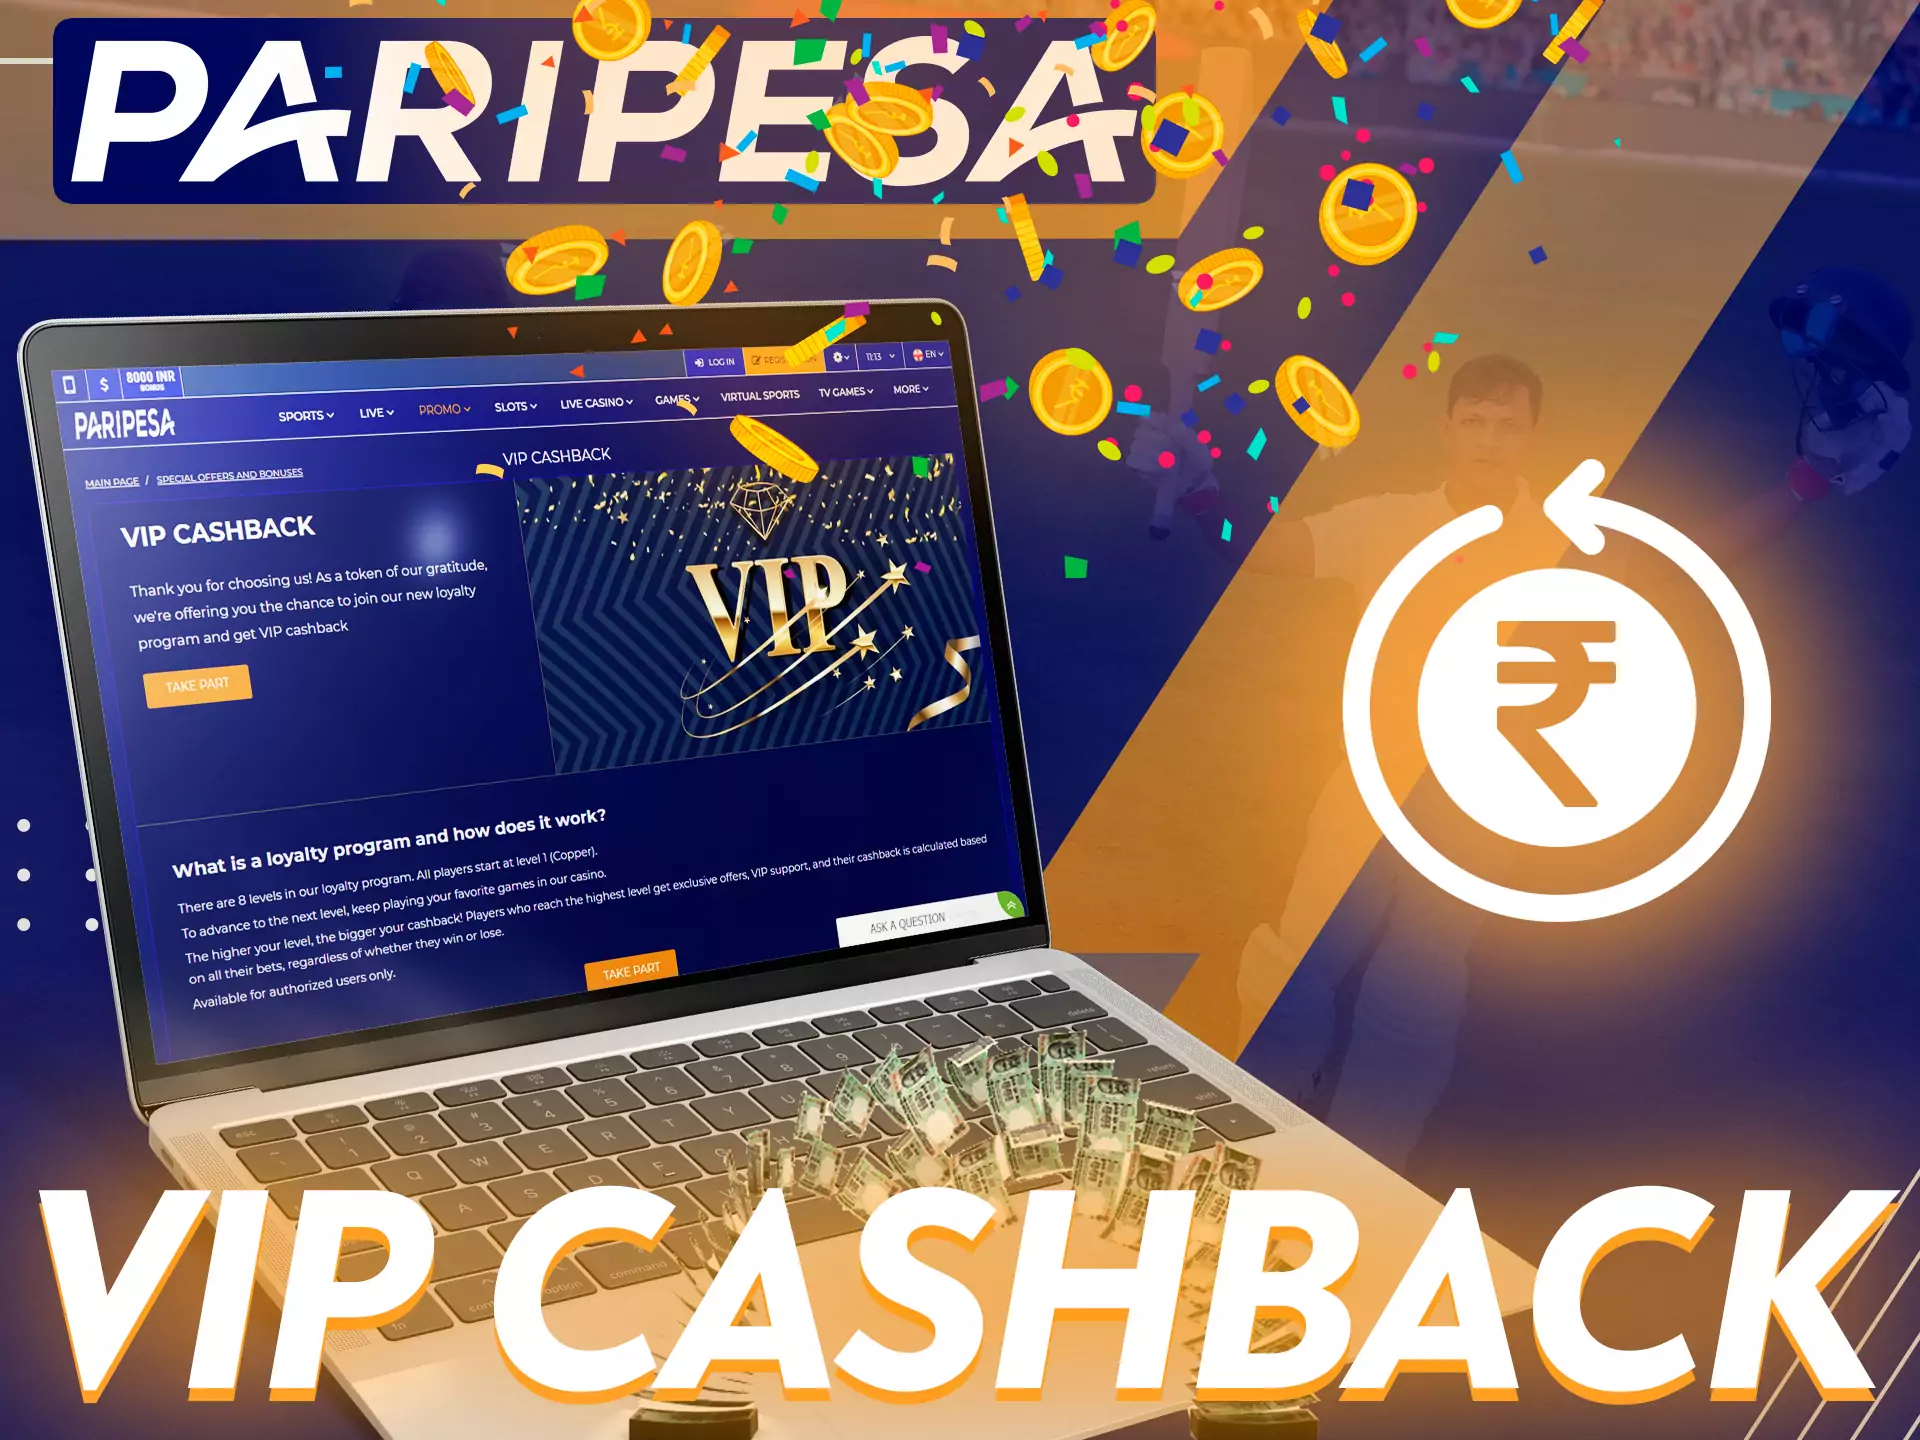 On Paripesa, you can get VIP cashback as a bonus.